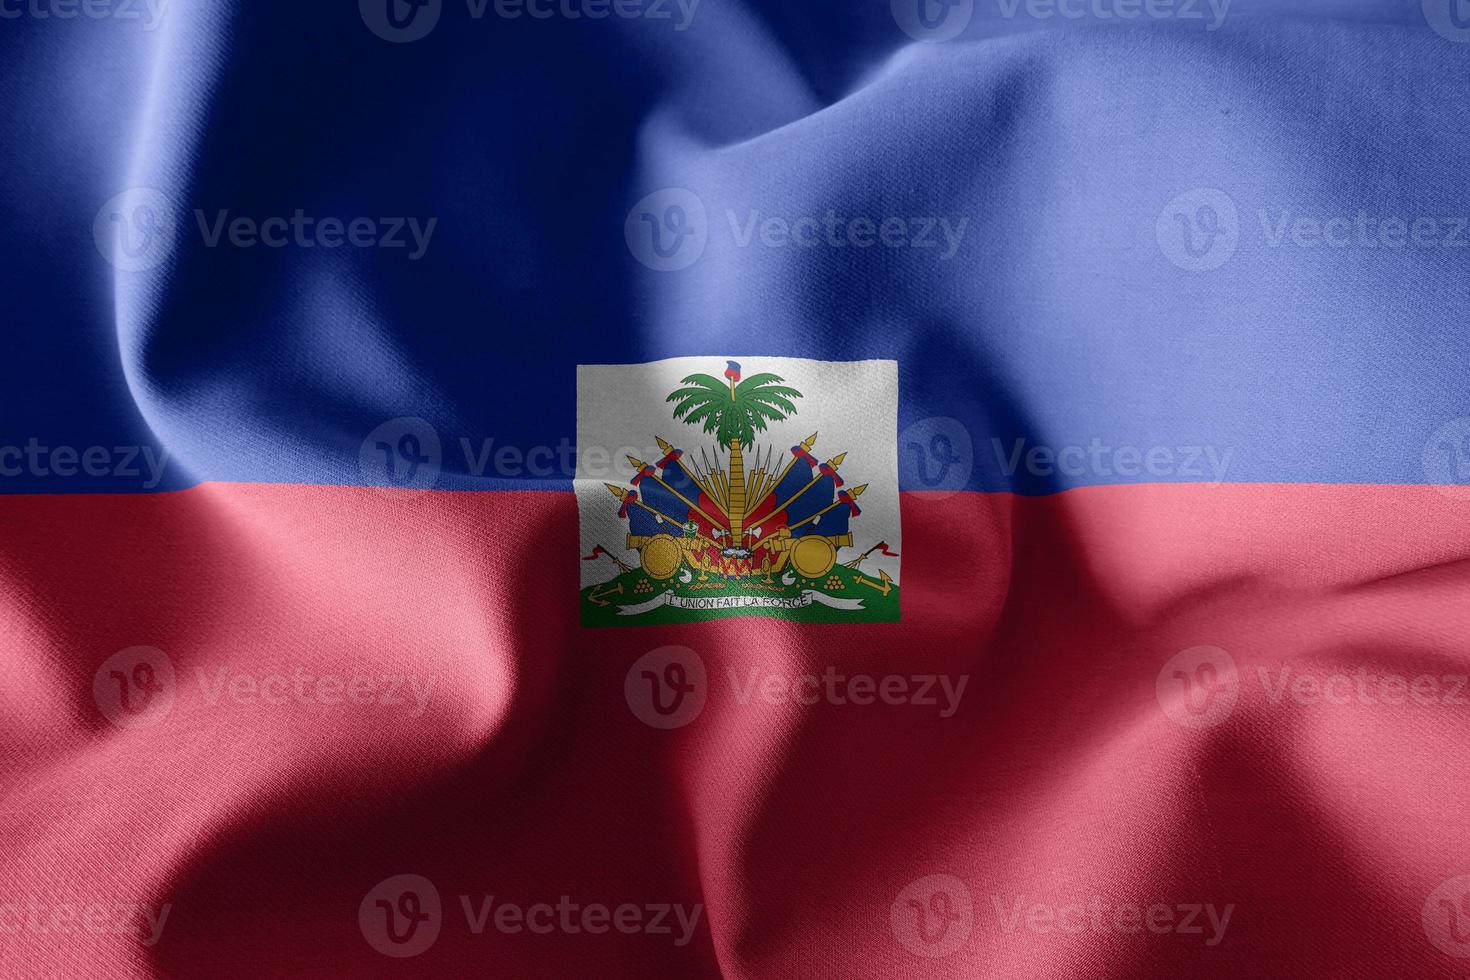 3d realistisch golvend zijde vlag van Haïti foto